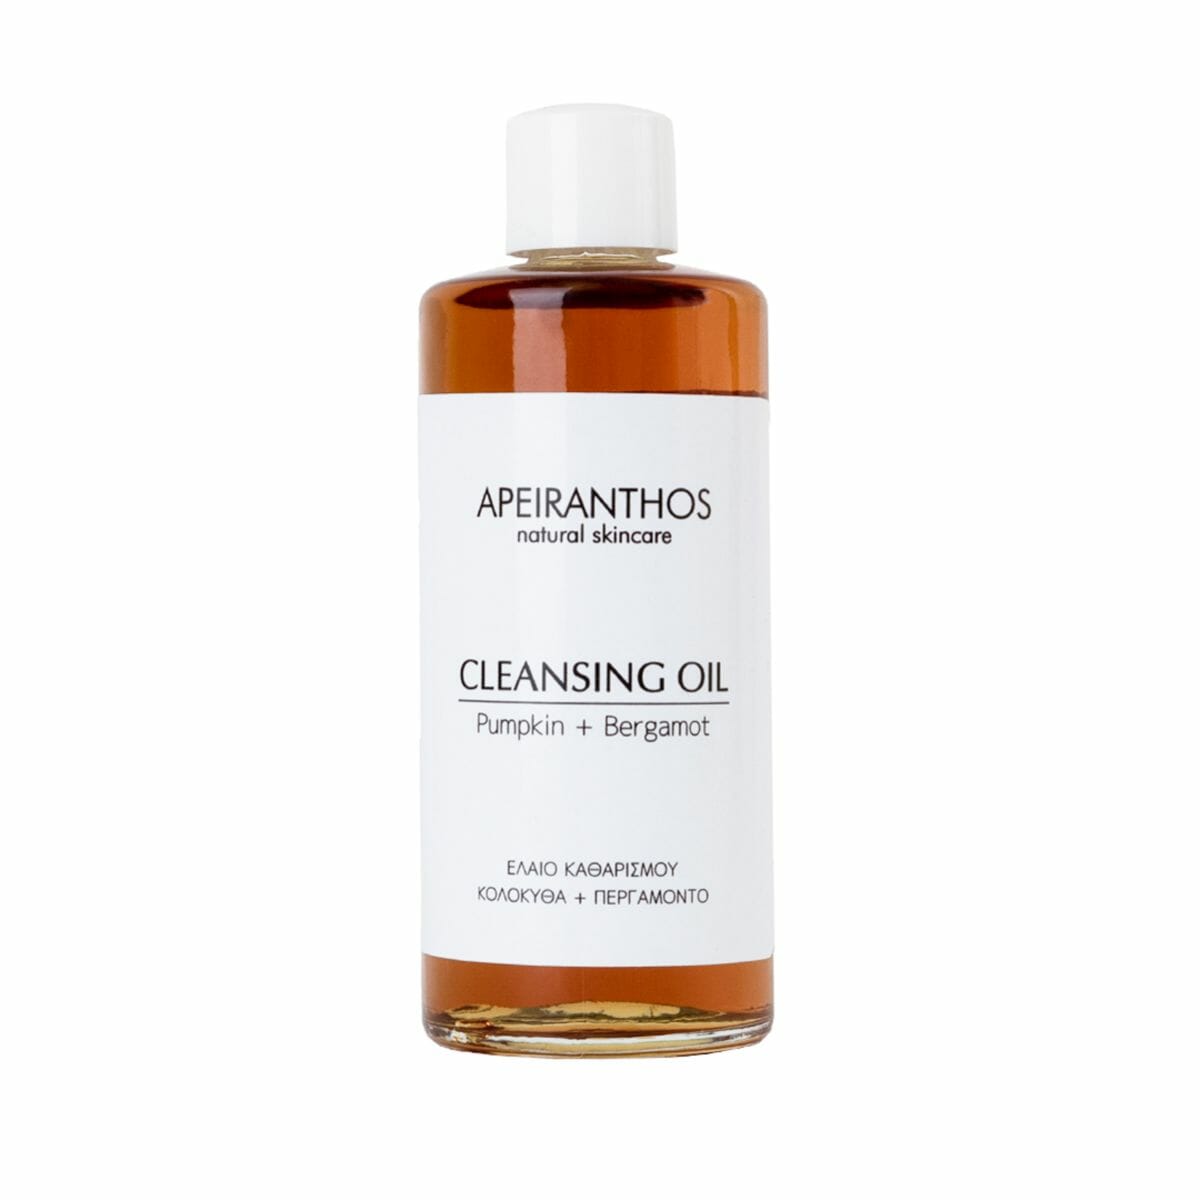 Apeiranthos Cleansing oil | Pumpkin + Bergamot 100ml